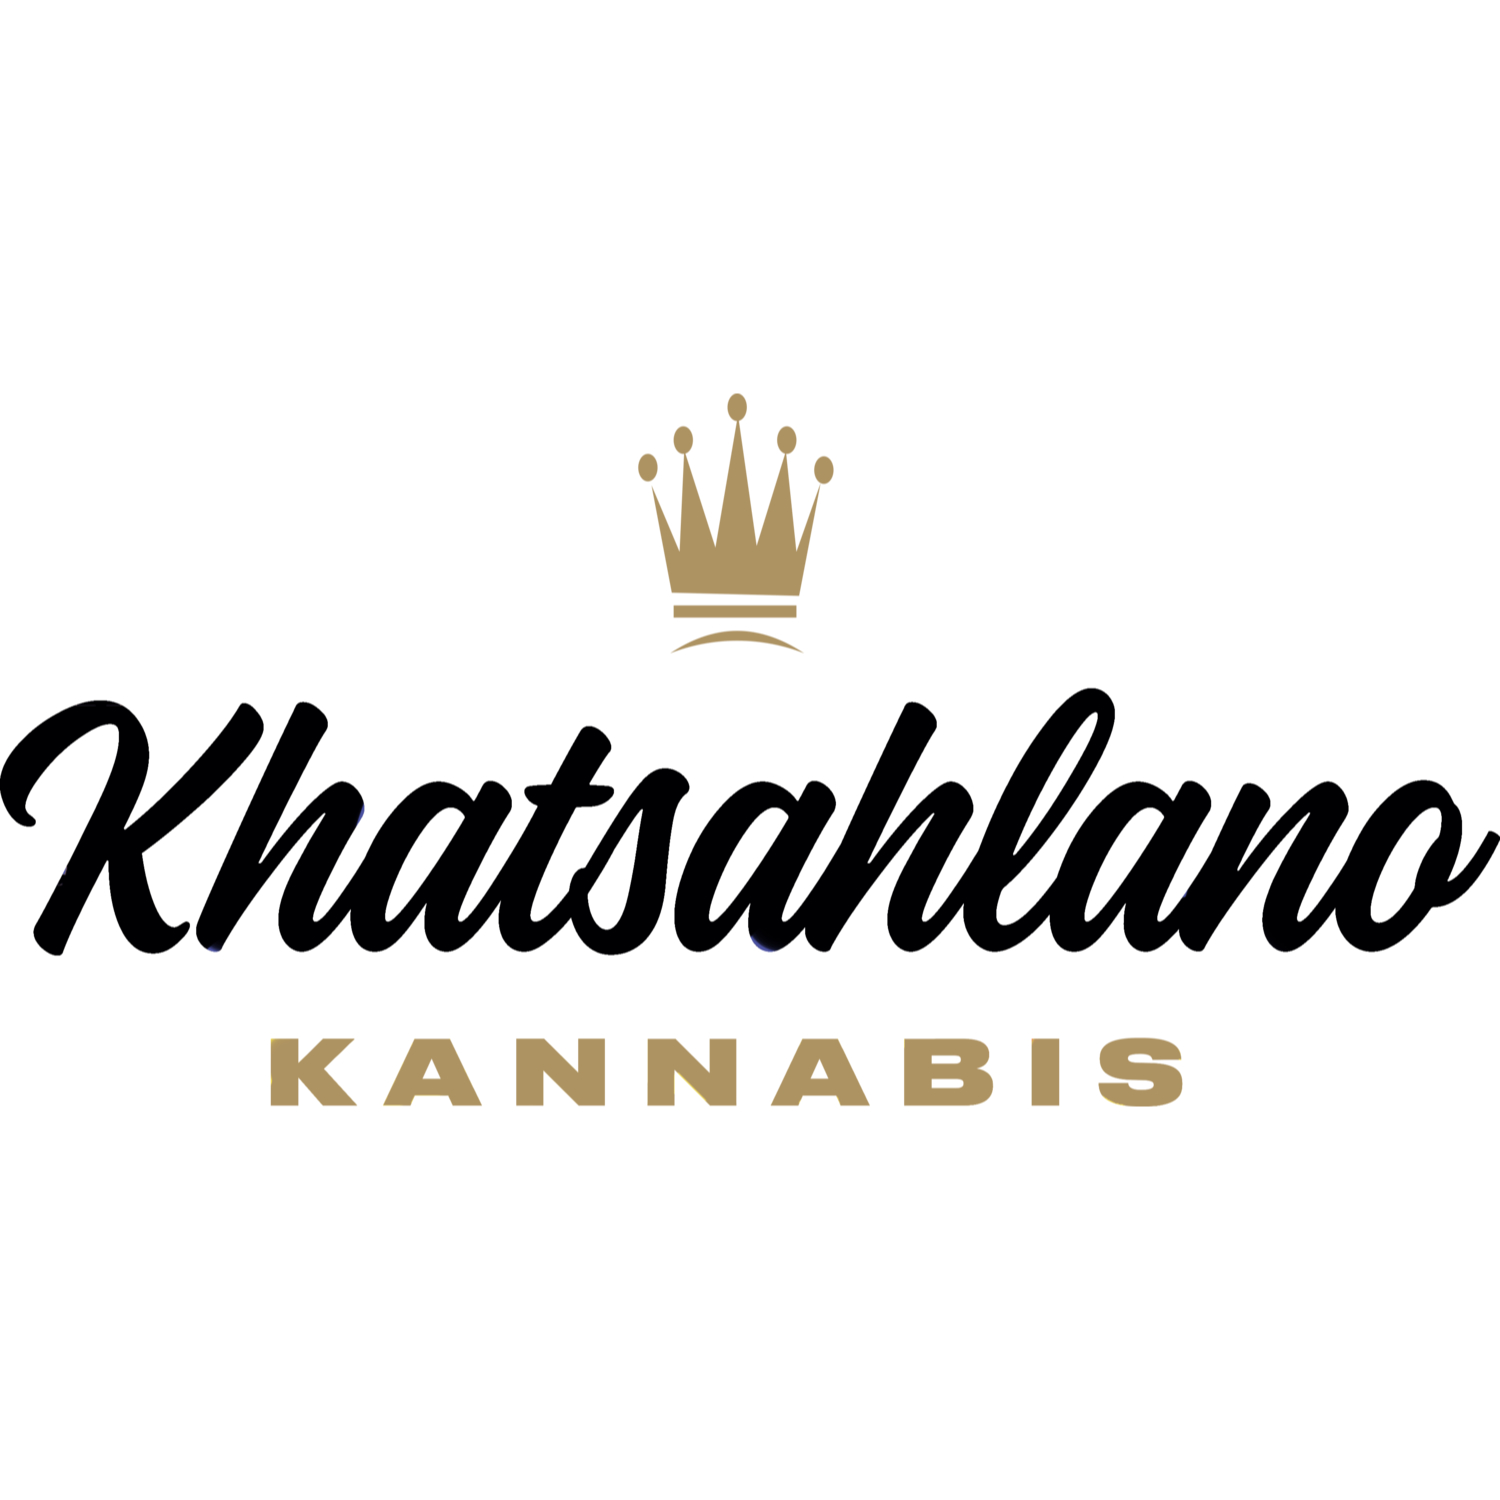 Khatsahlano Kannabis Weed Dispensary Vancouver - Cannabis thérapeutique